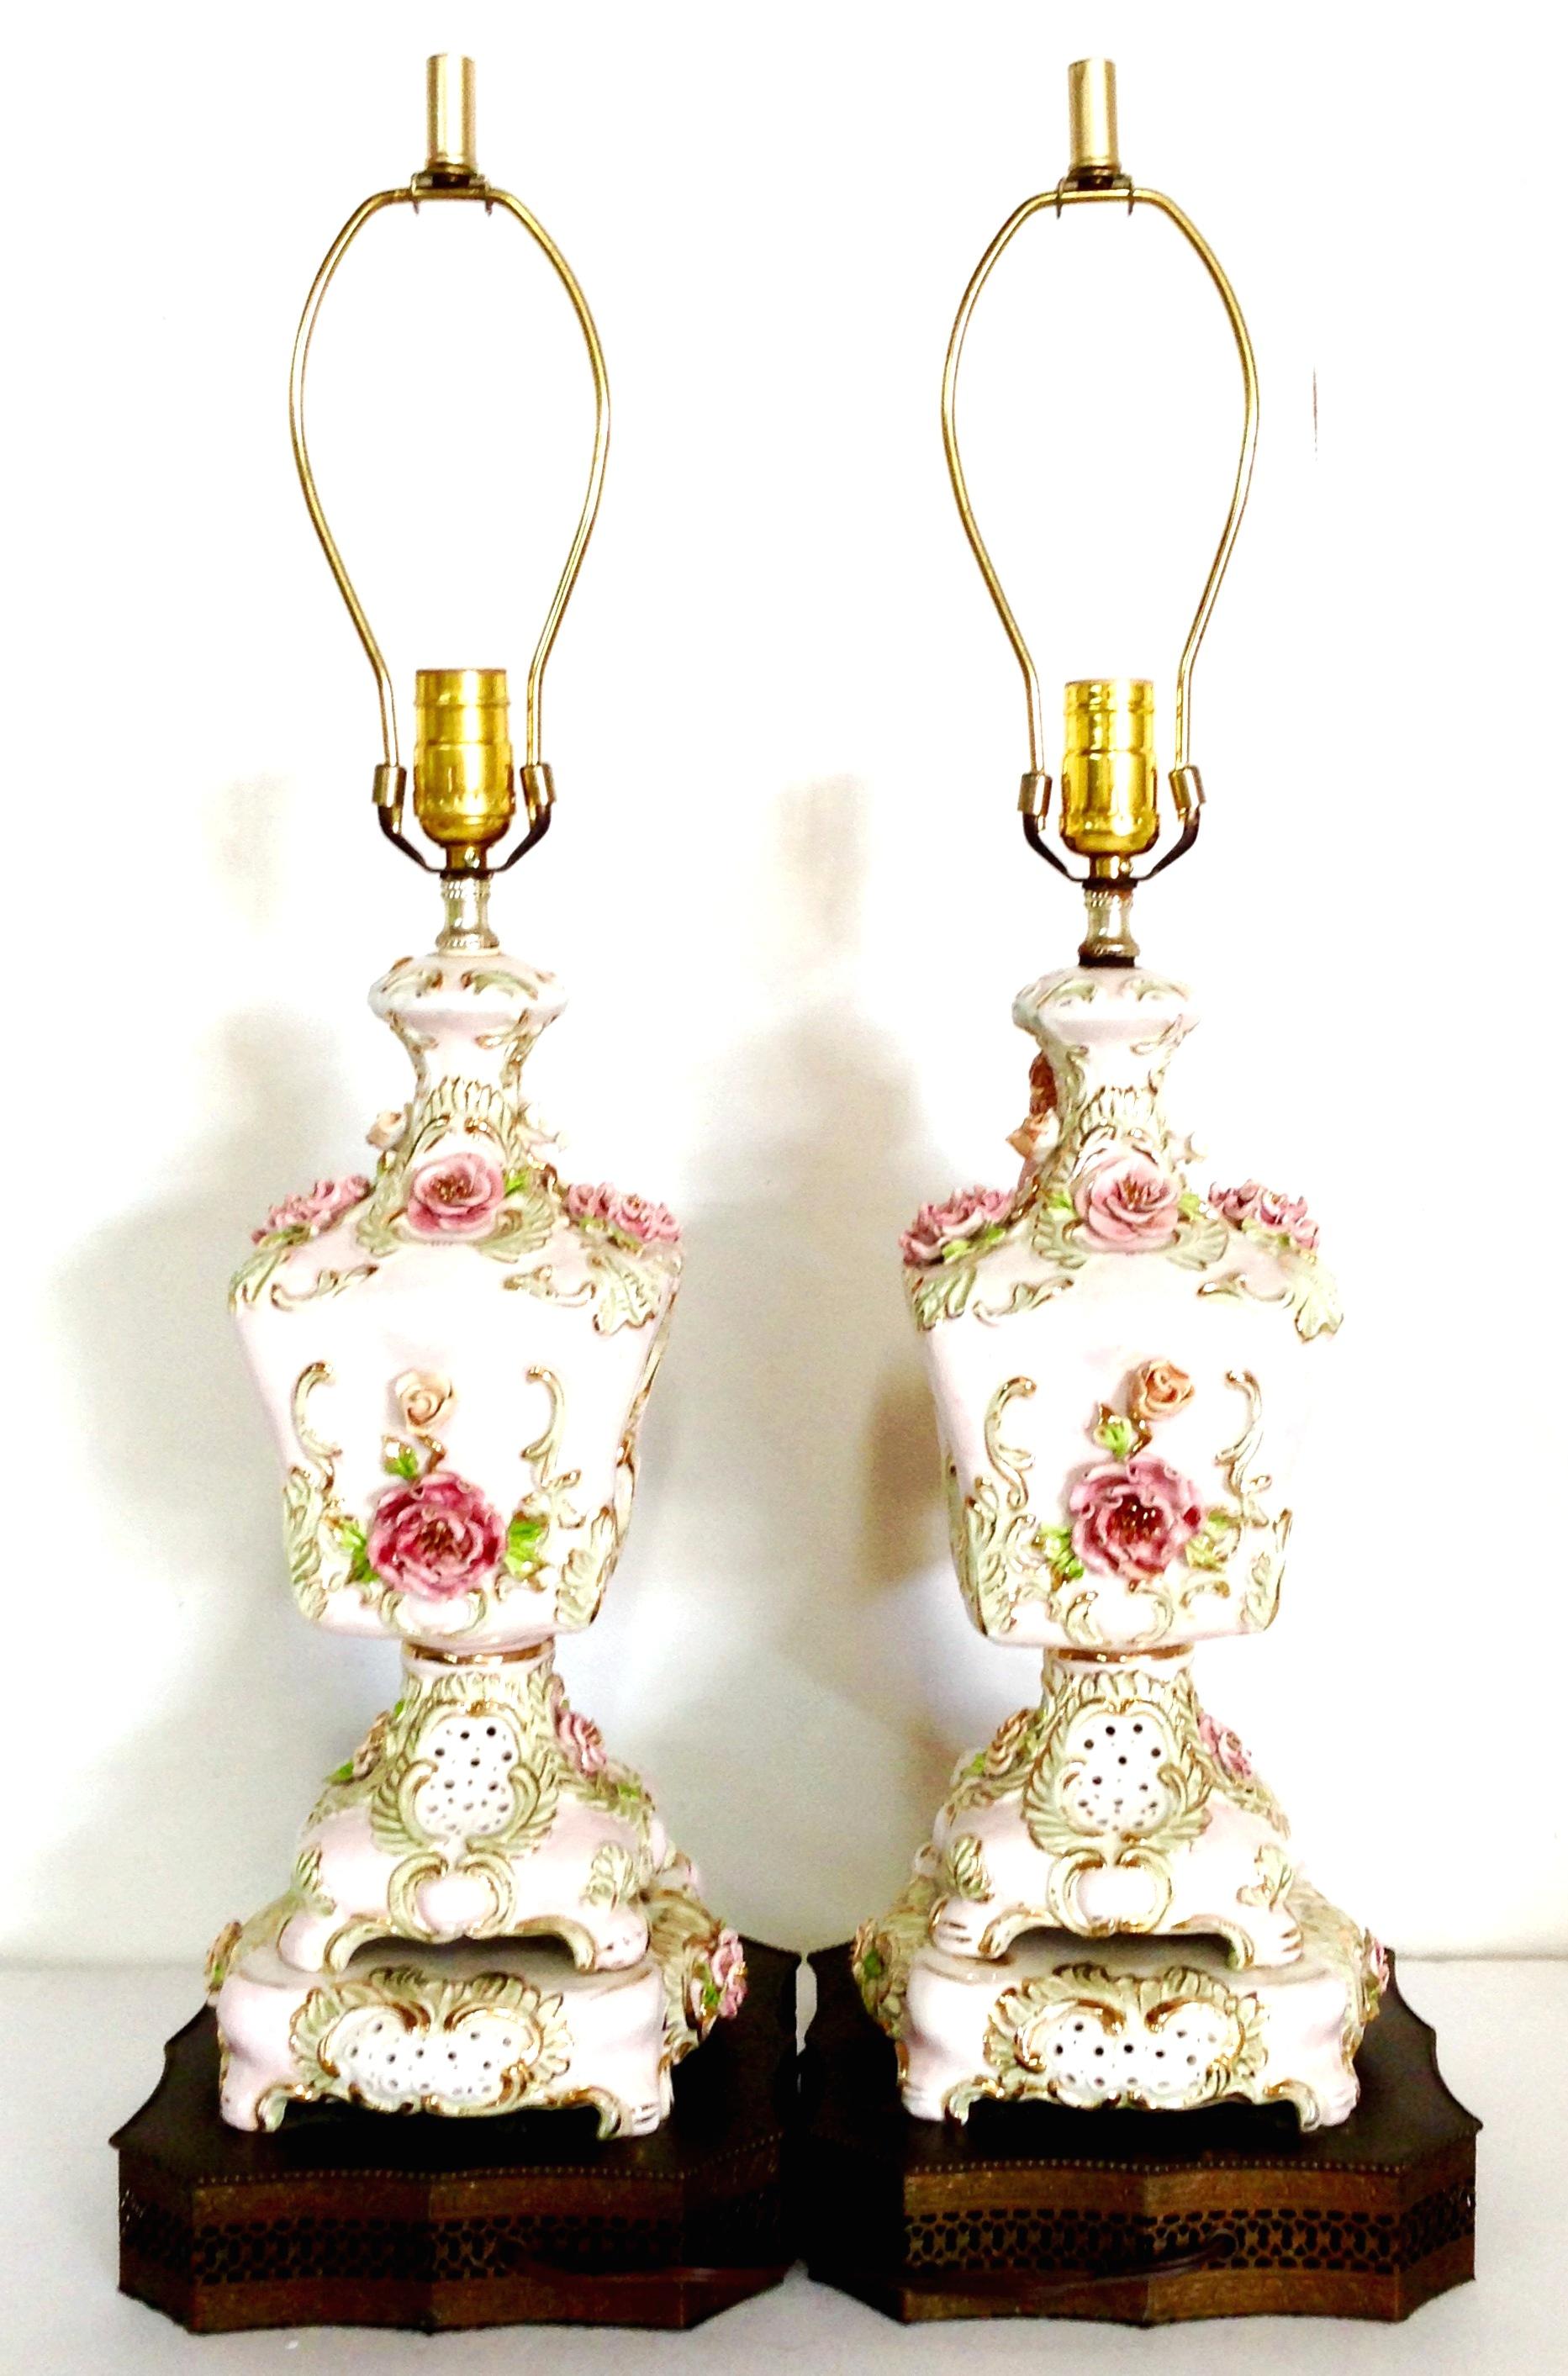 benrose italy porcelain lamps